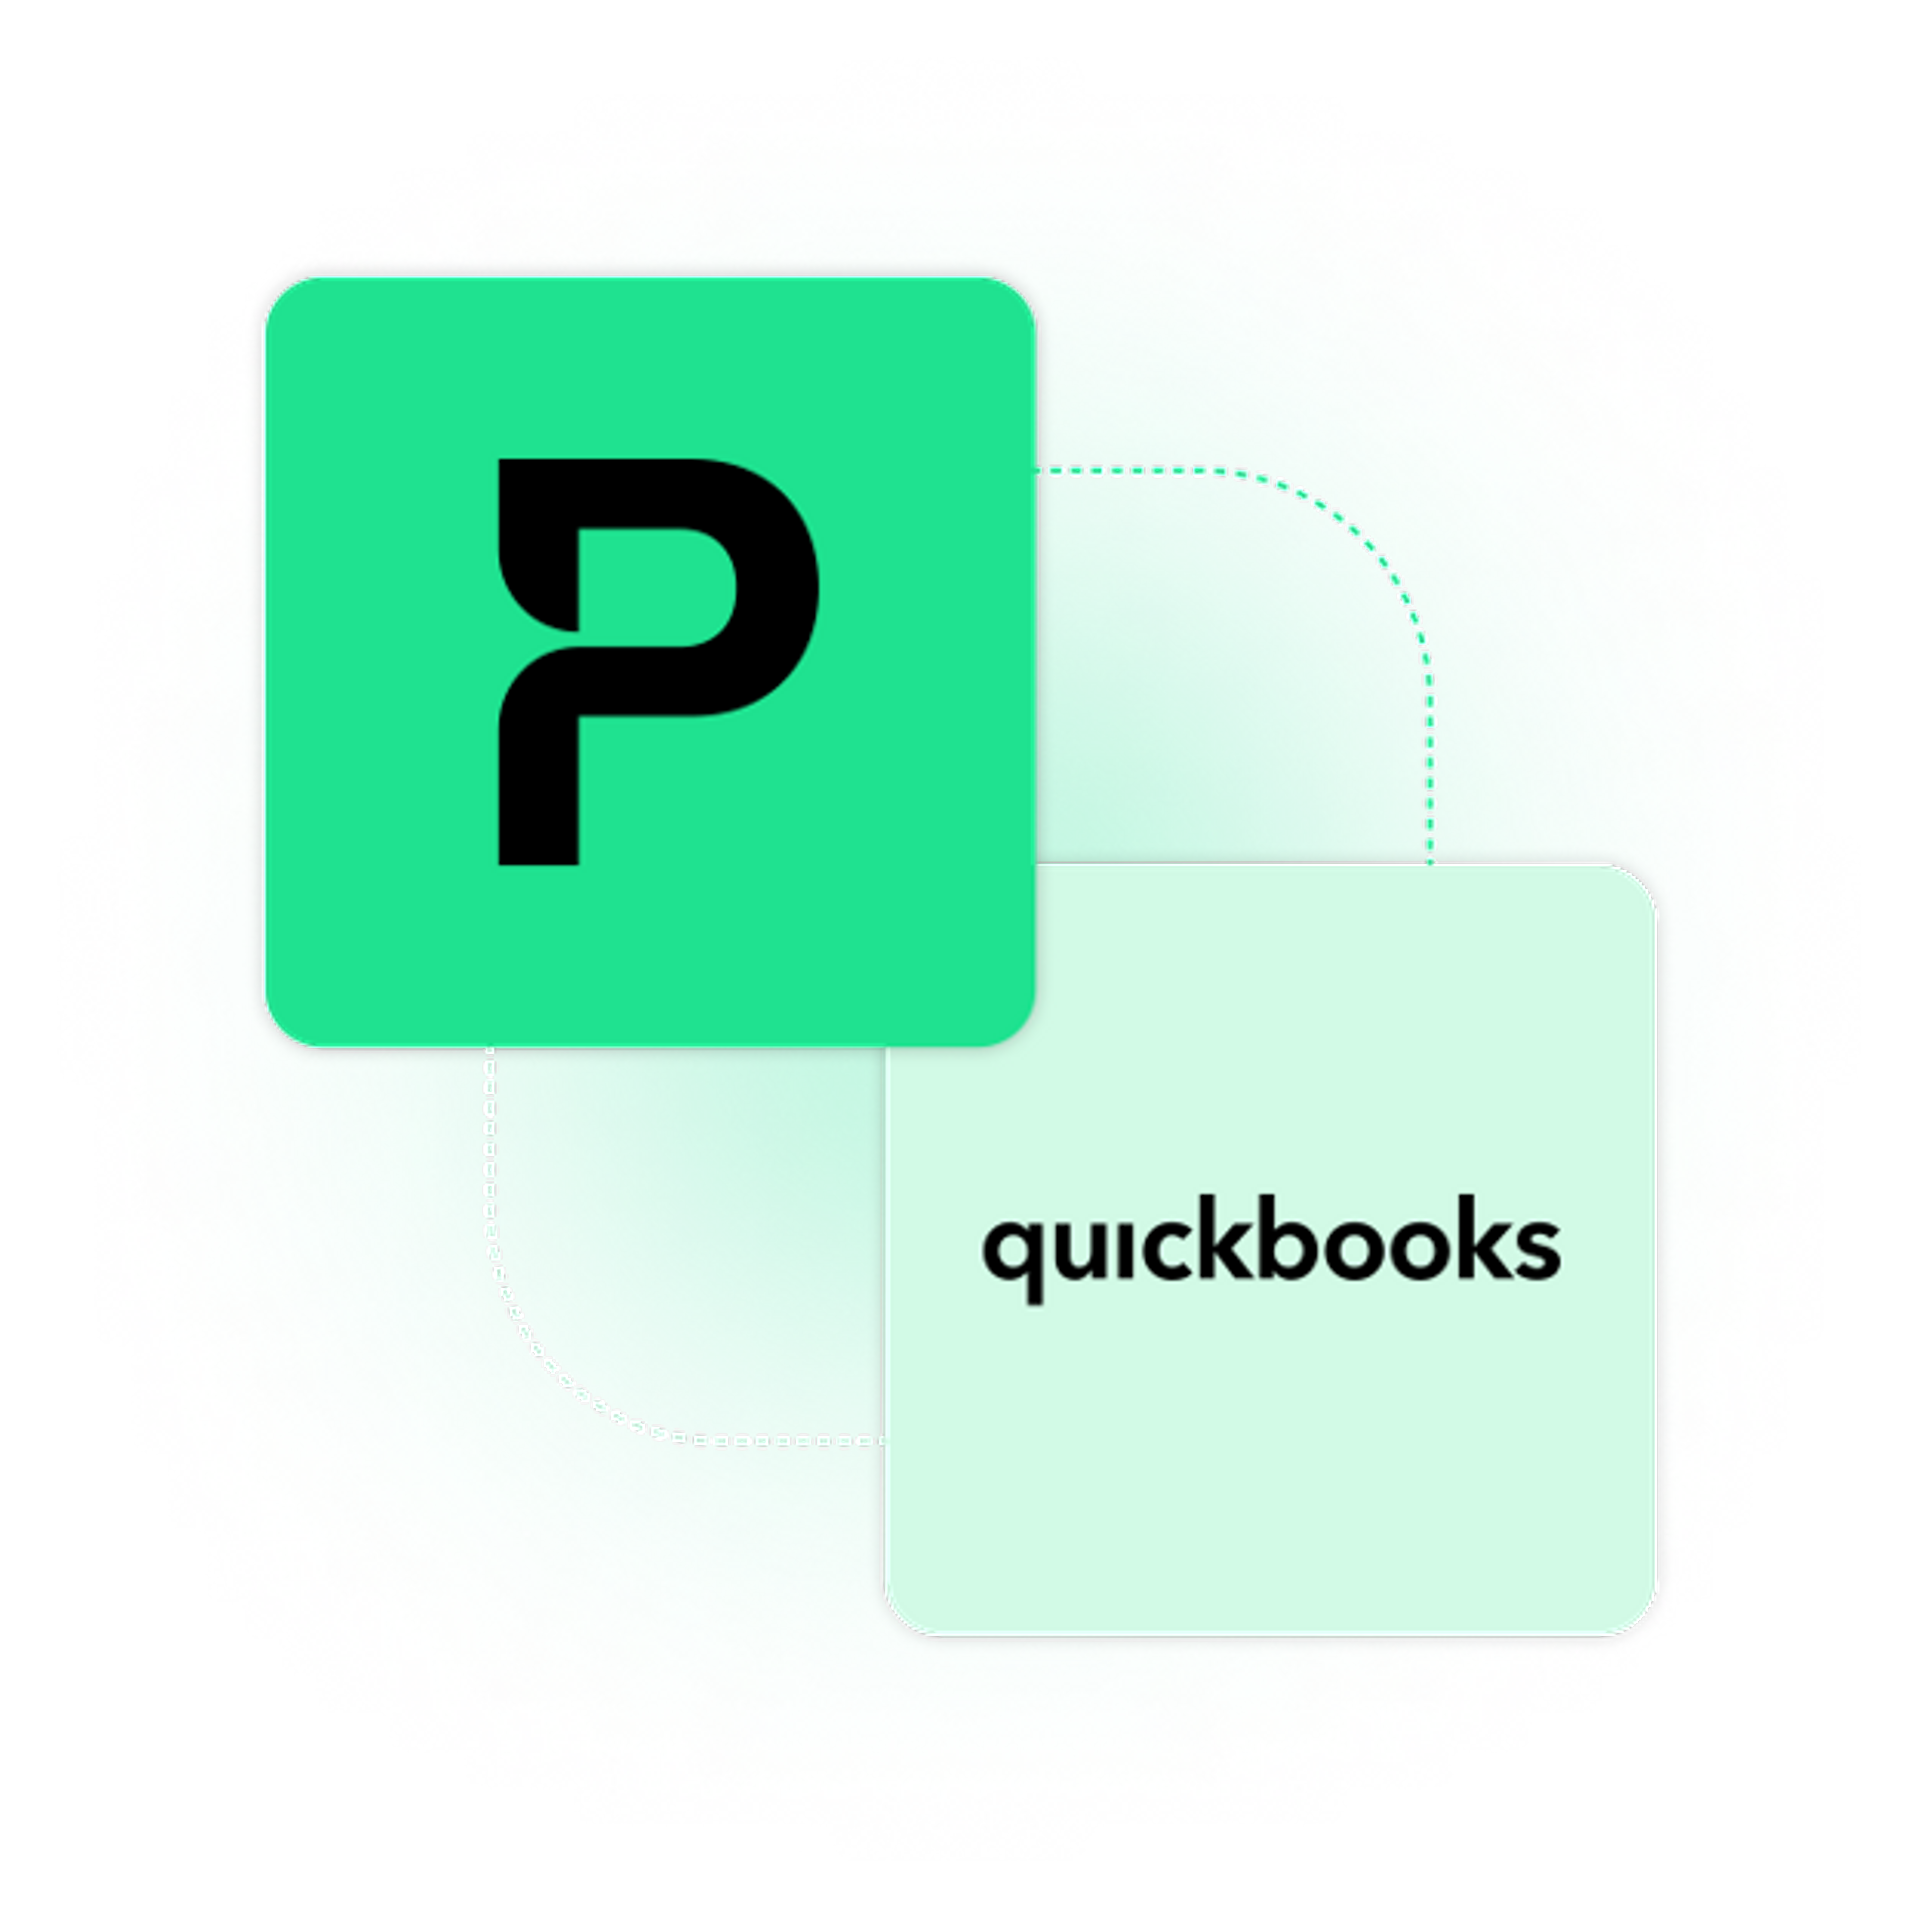 Payhawk’s-Direct-QuickBooks-integration